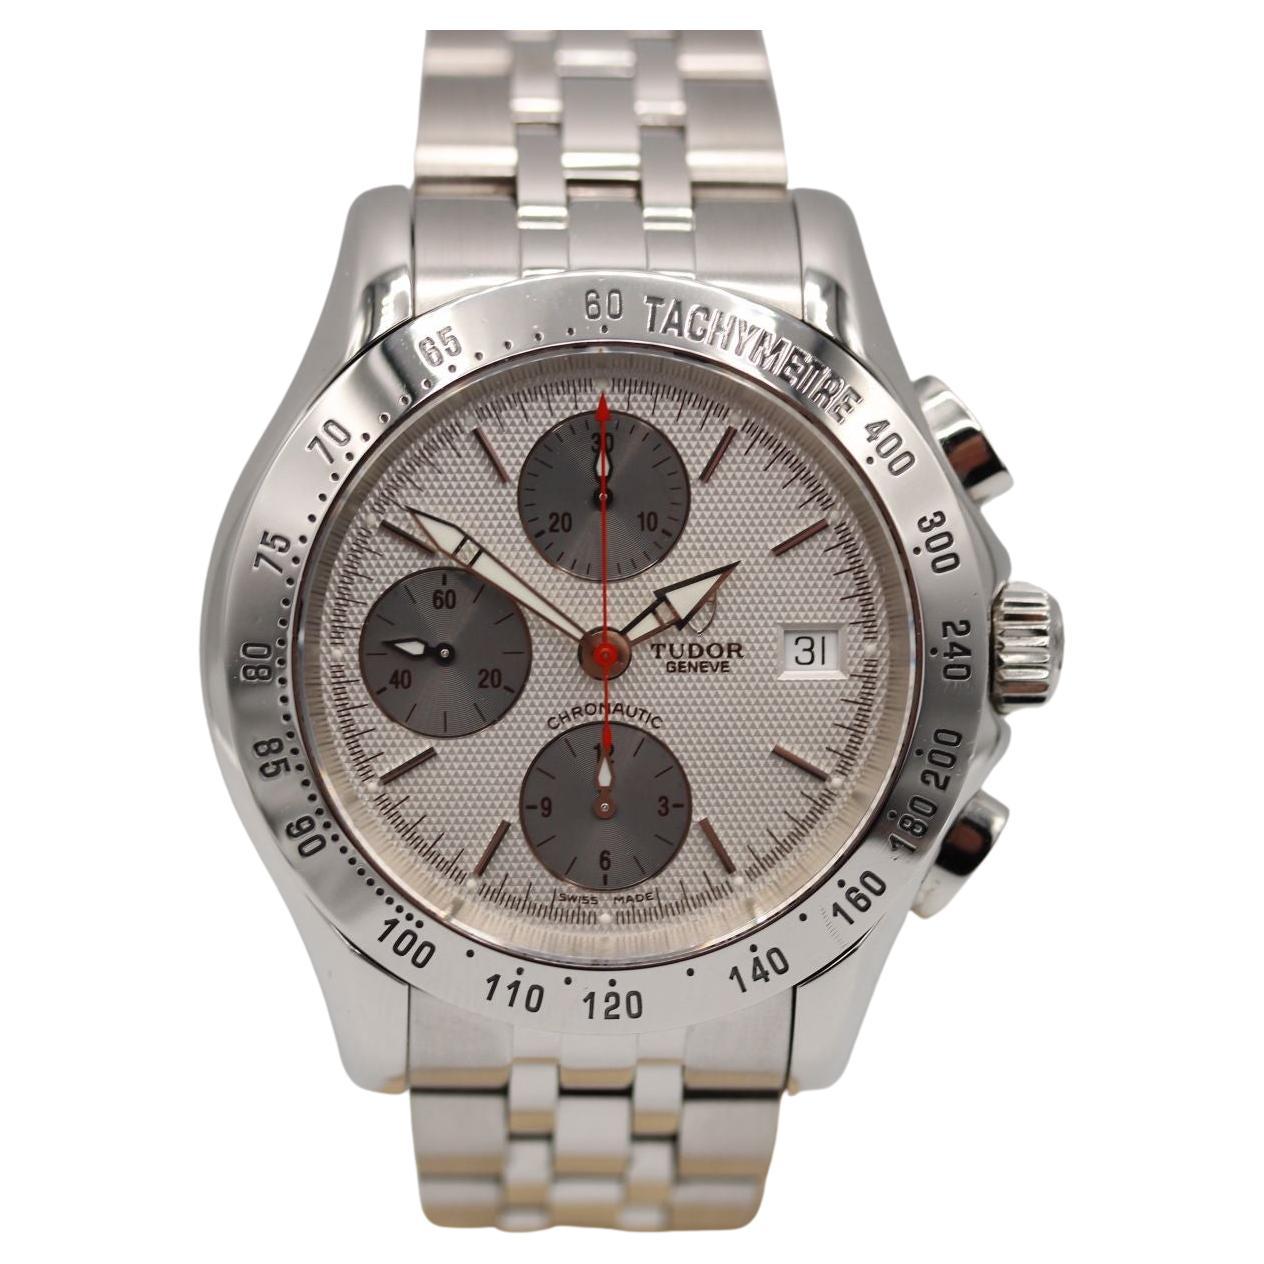  Chronographe chronographe Tudor  79390/P Set complet 2007  en vente